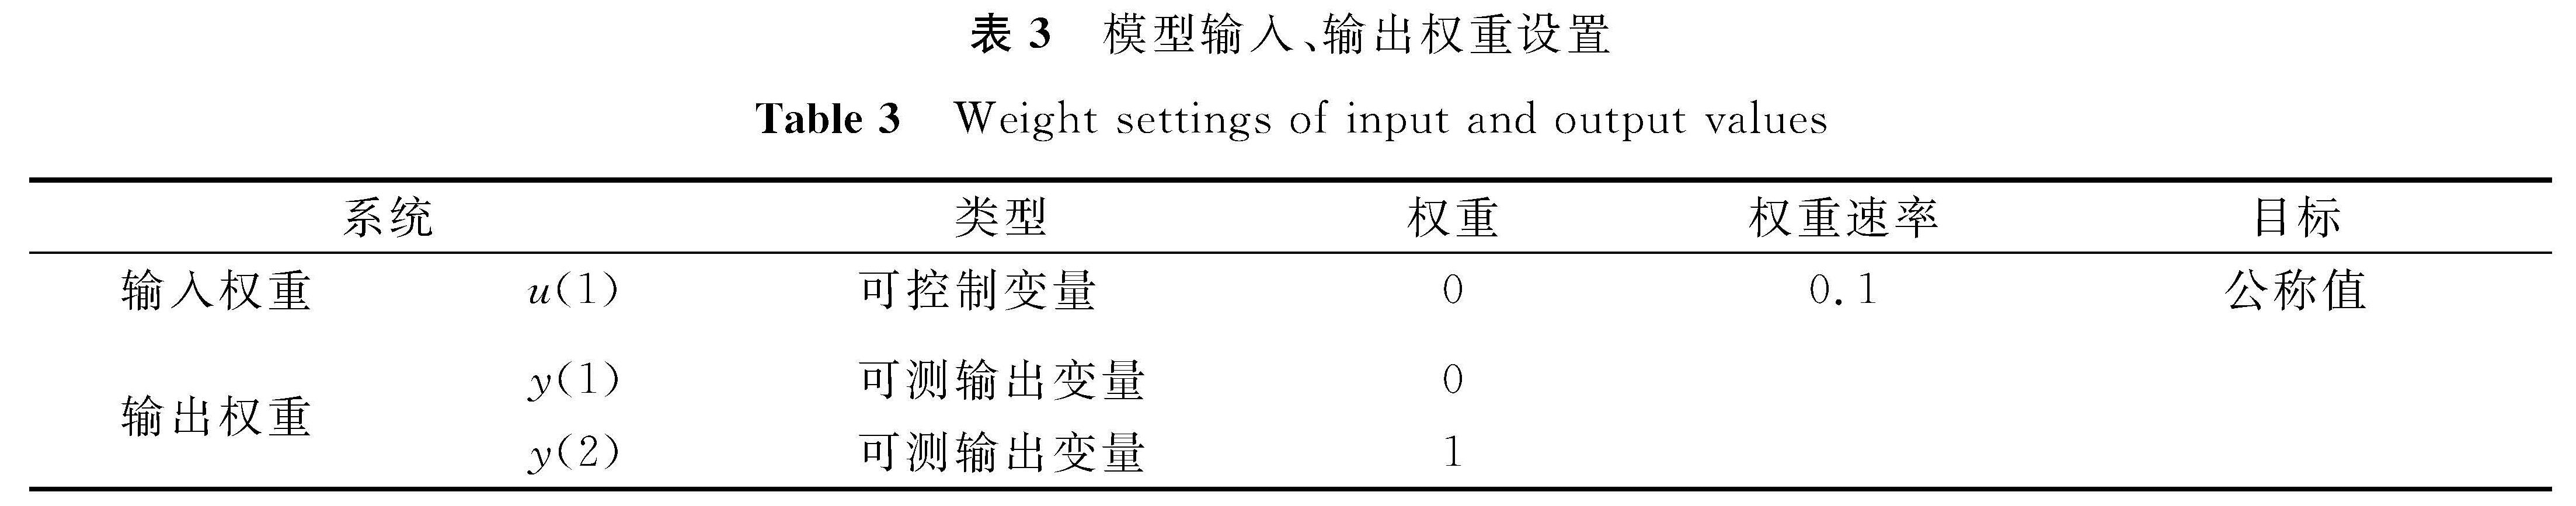 表3 模型输入、输出权重设置<br/>Table 3 Weight settings of input and output values